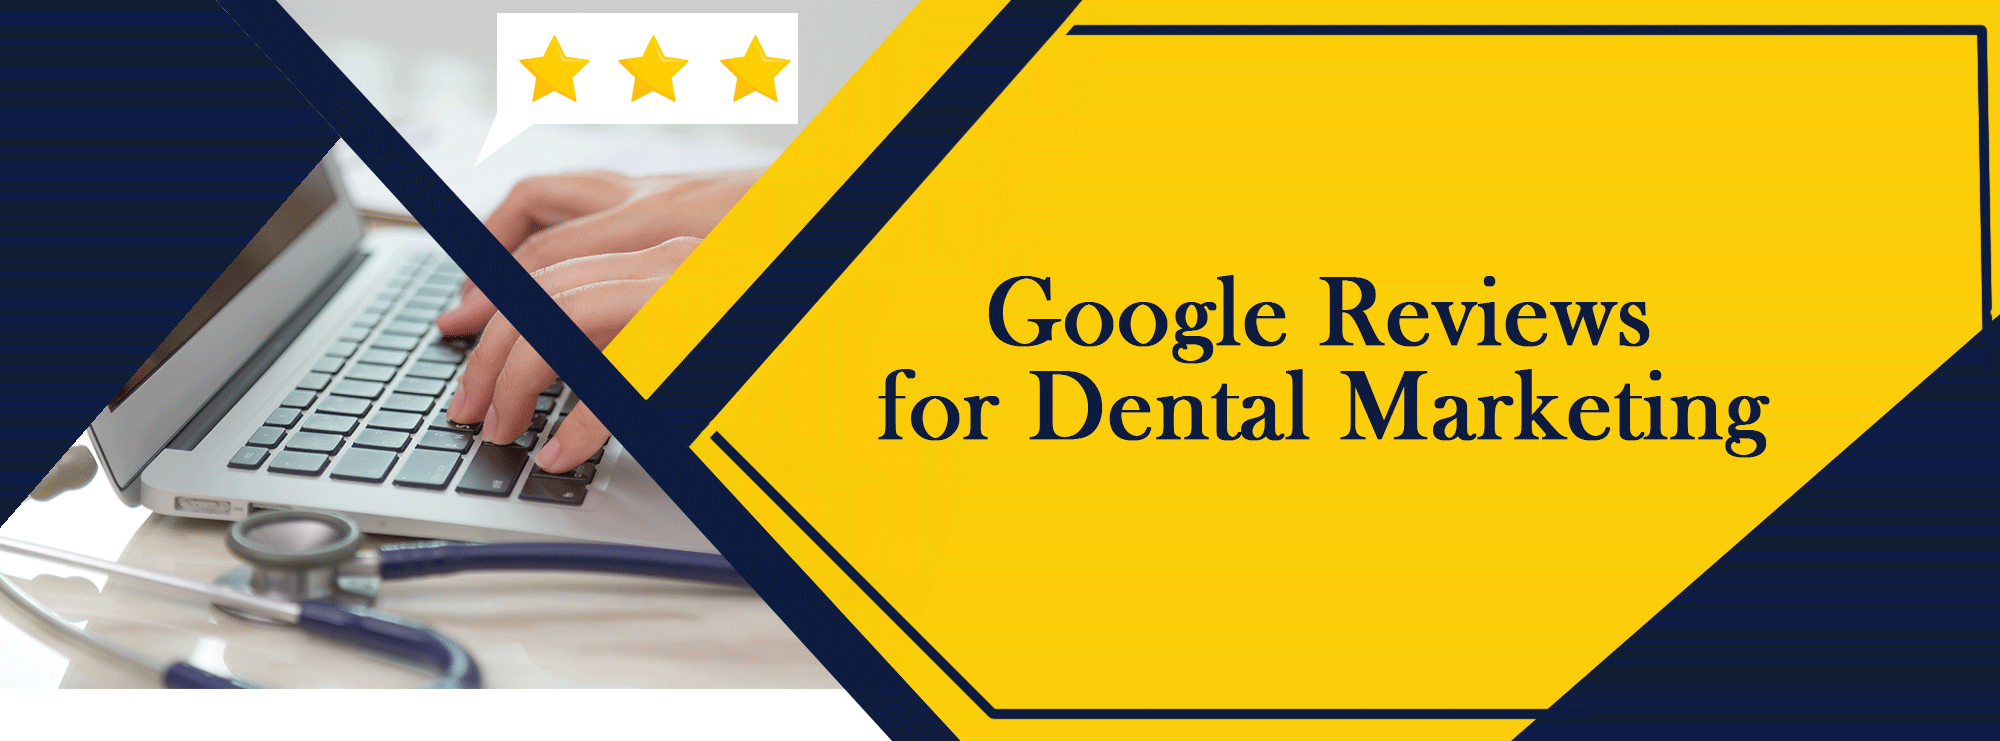 cover-Google-Reviews-for-Dental-Marketing.png